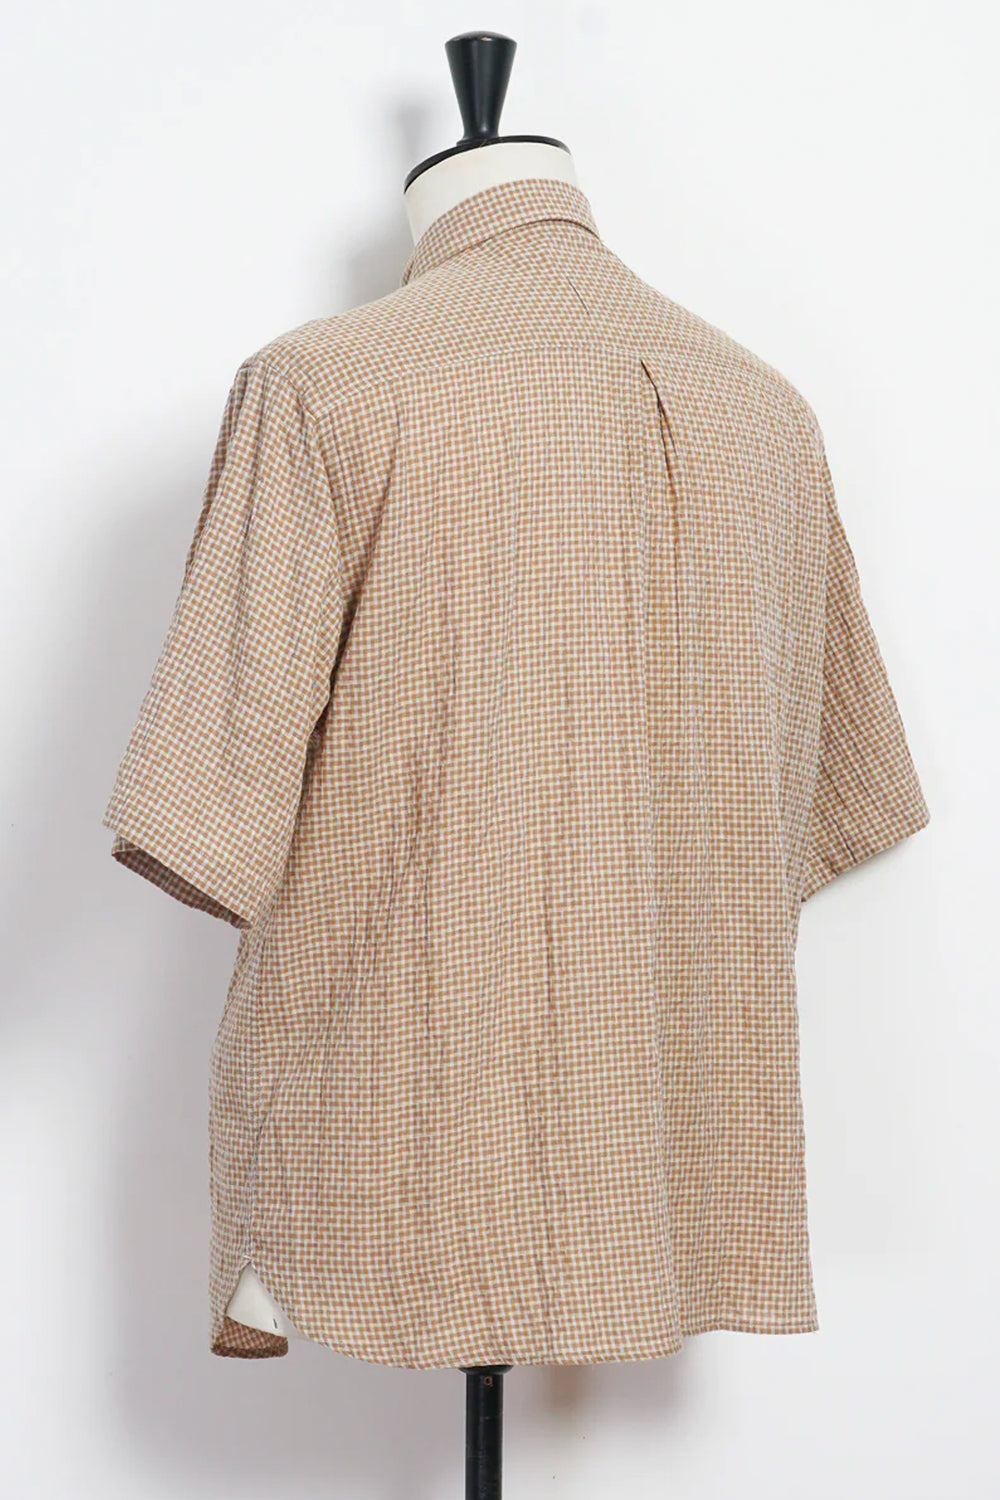 REIDAR Short Sleeve Shirt Brown Checks